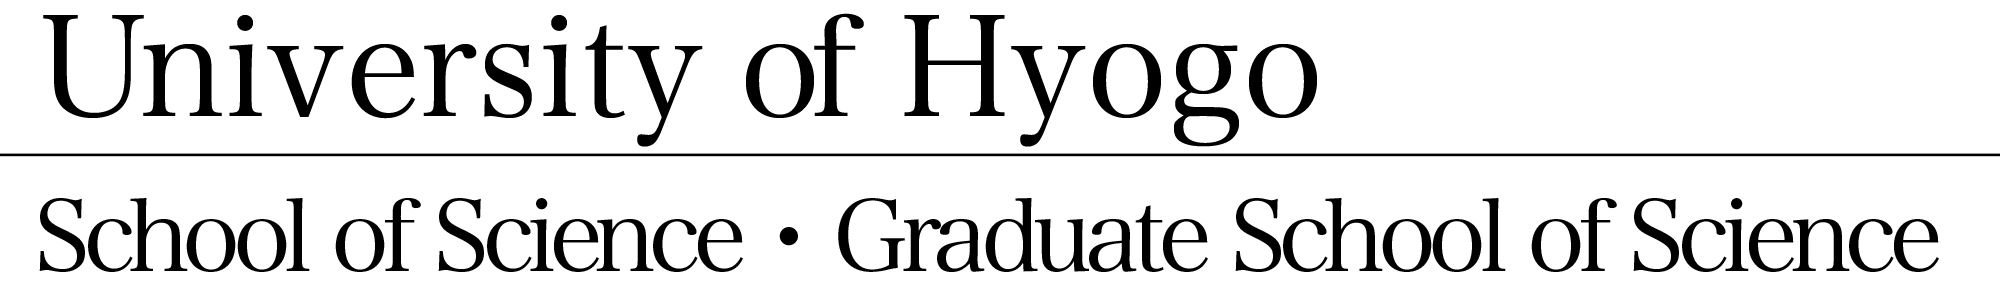 University of Hyogo School of Science